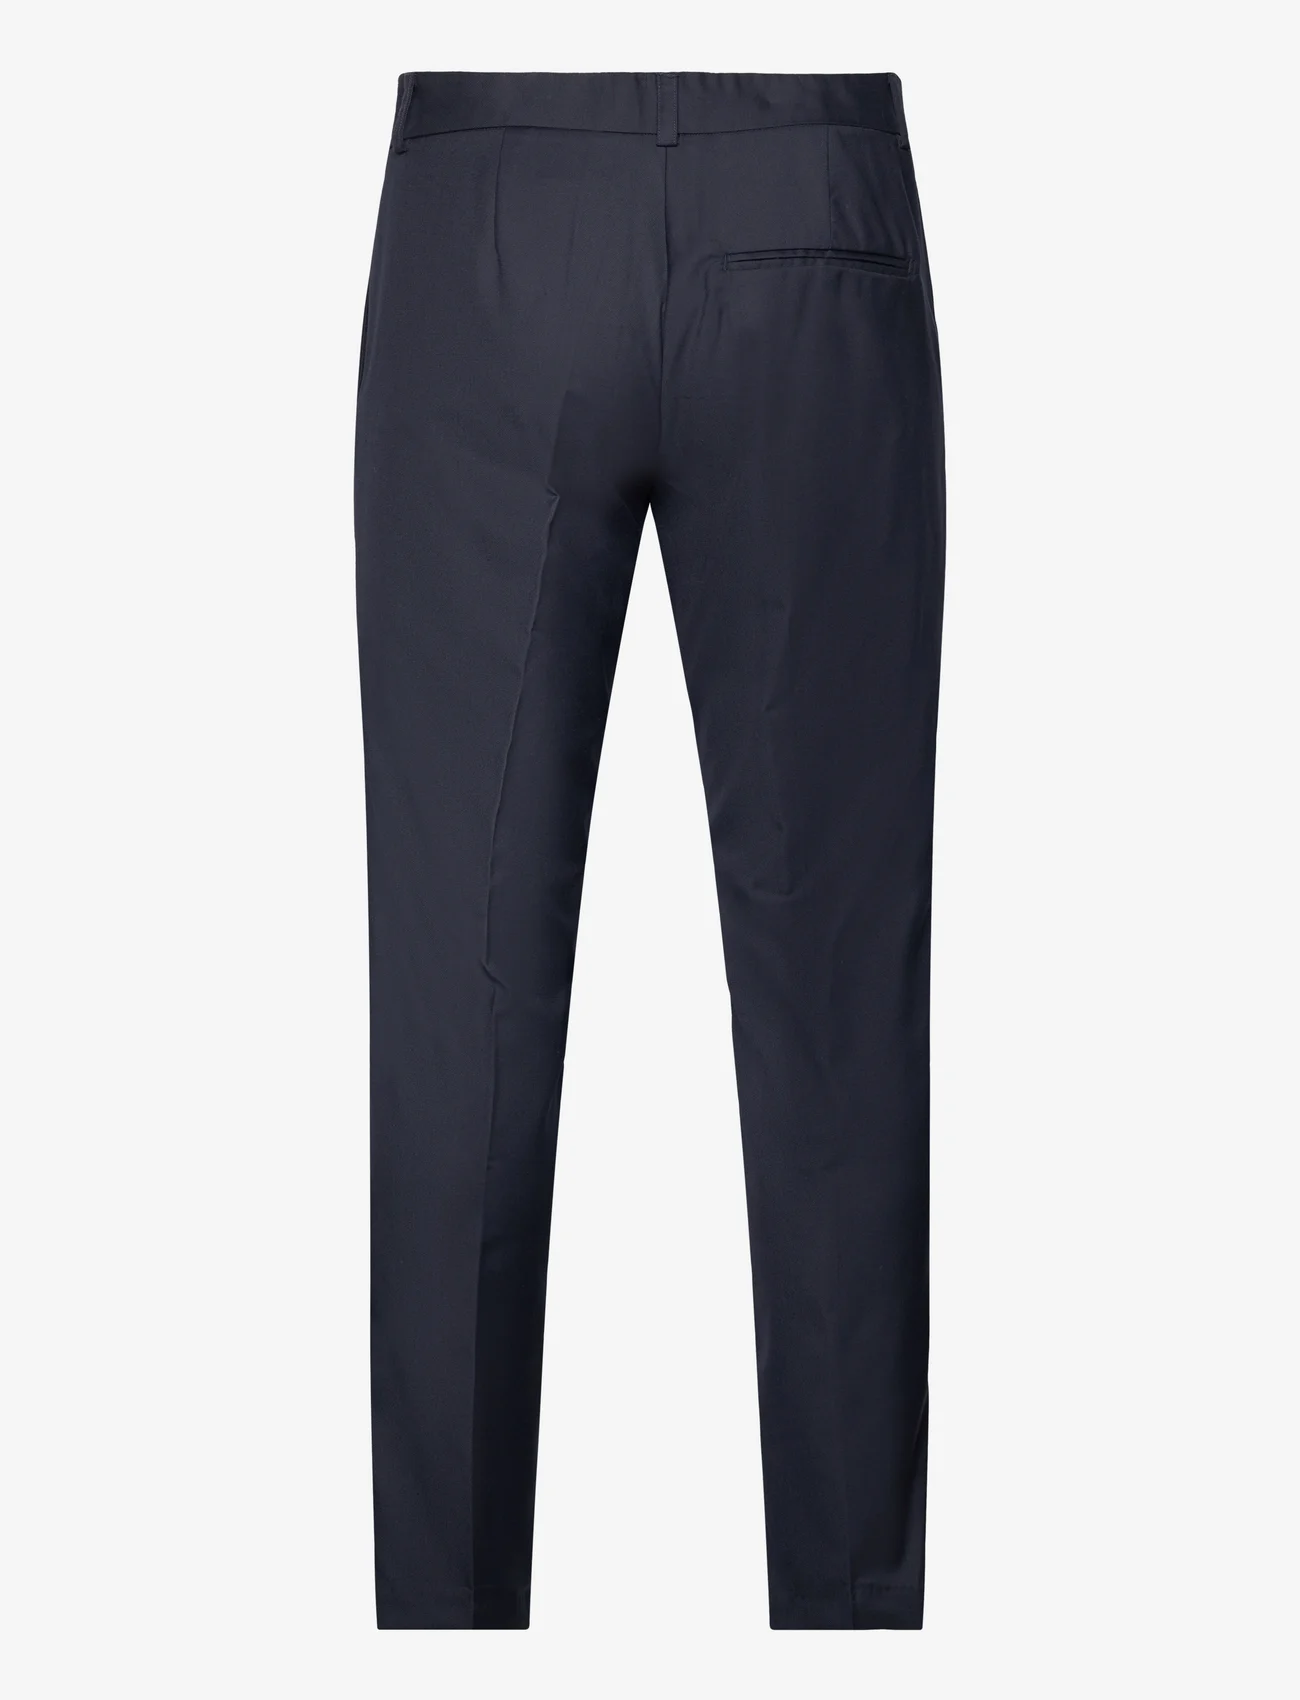 Bruuns Bazaar - MicksBBDagger pants - puvunhousut - navy - 1